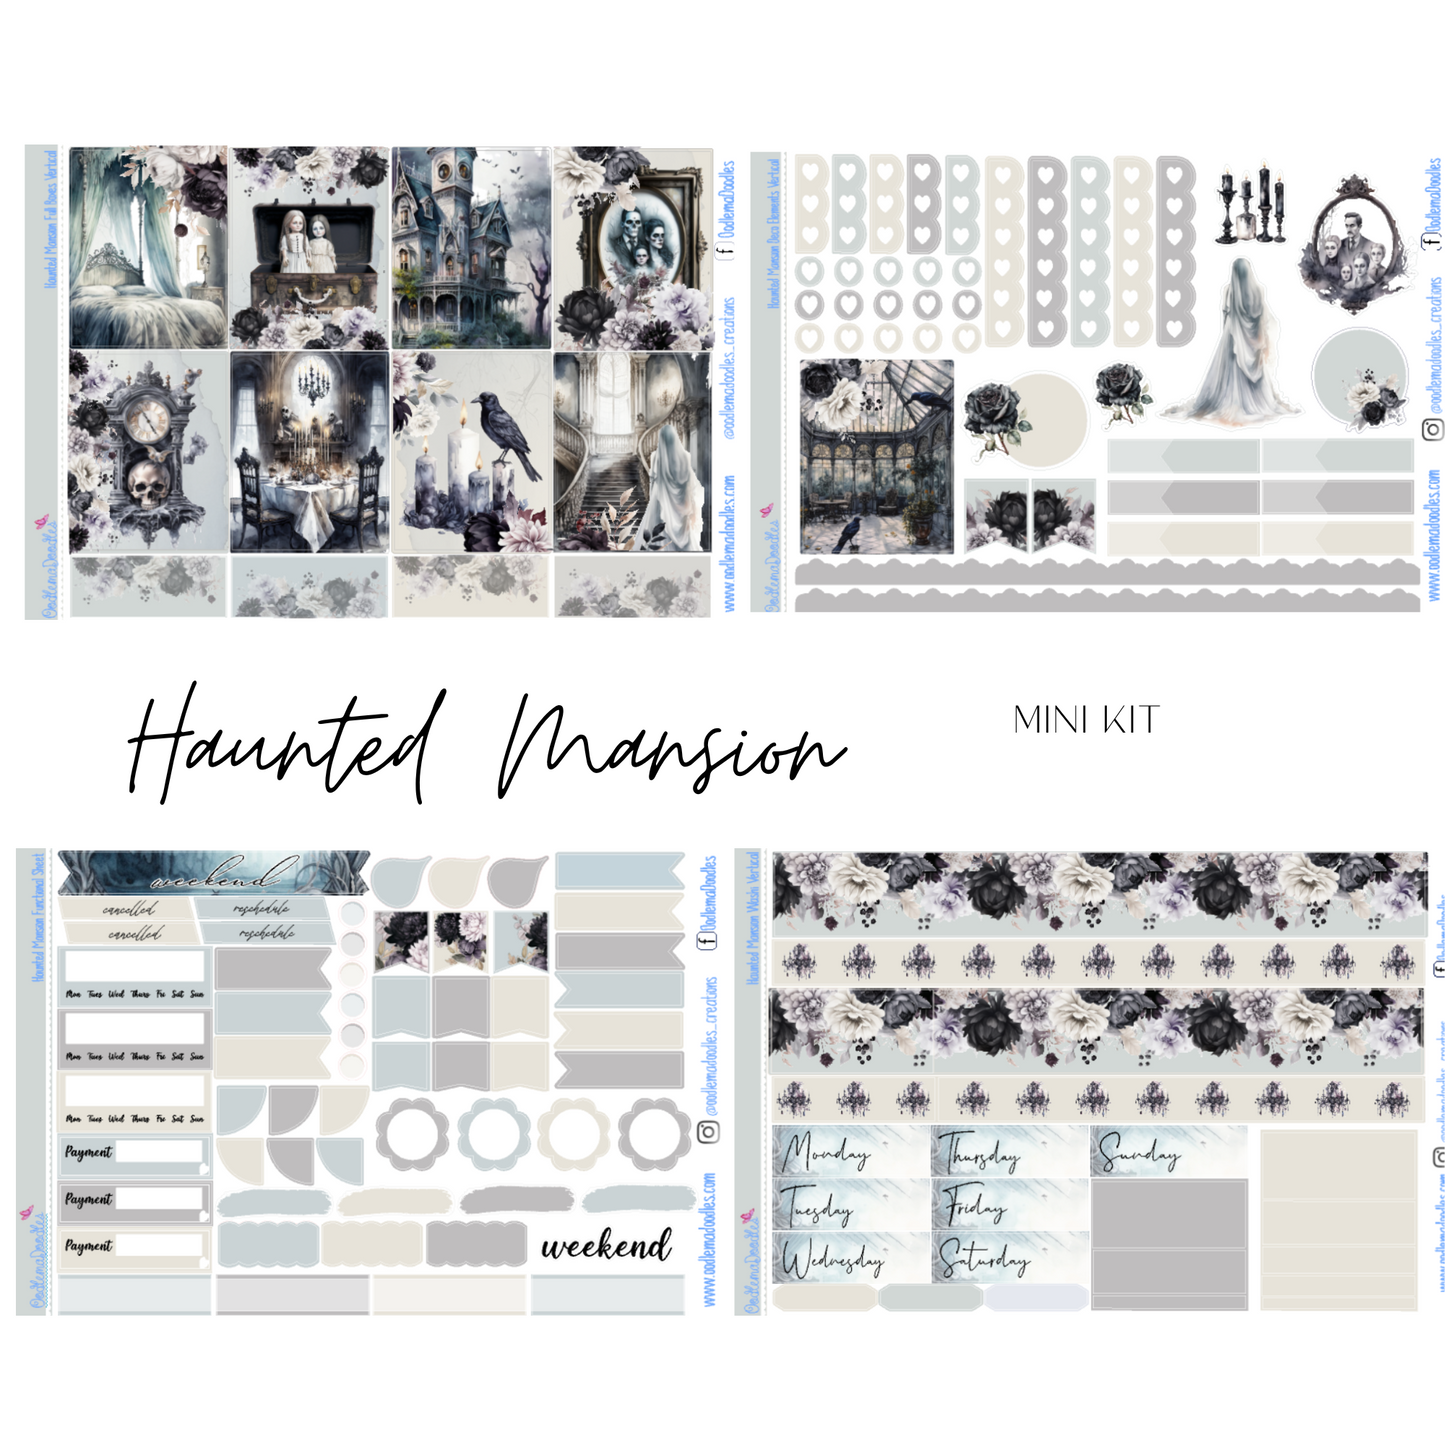 Haunted Mansion Mini Kit